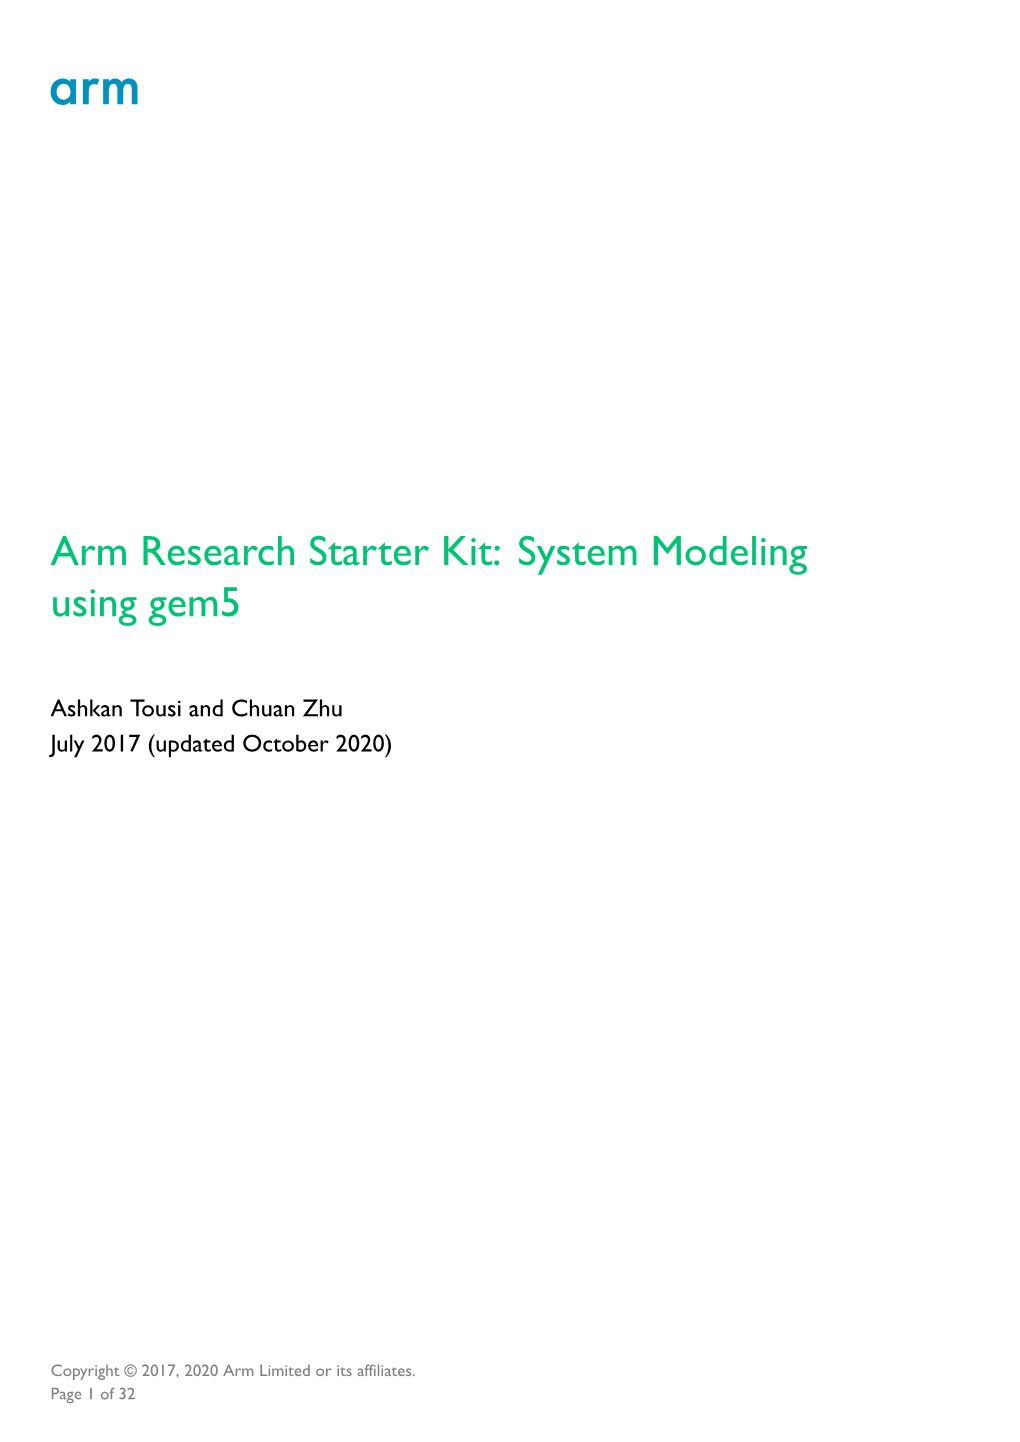 Arm Research Starter Kit: System Modeling Using Gem5